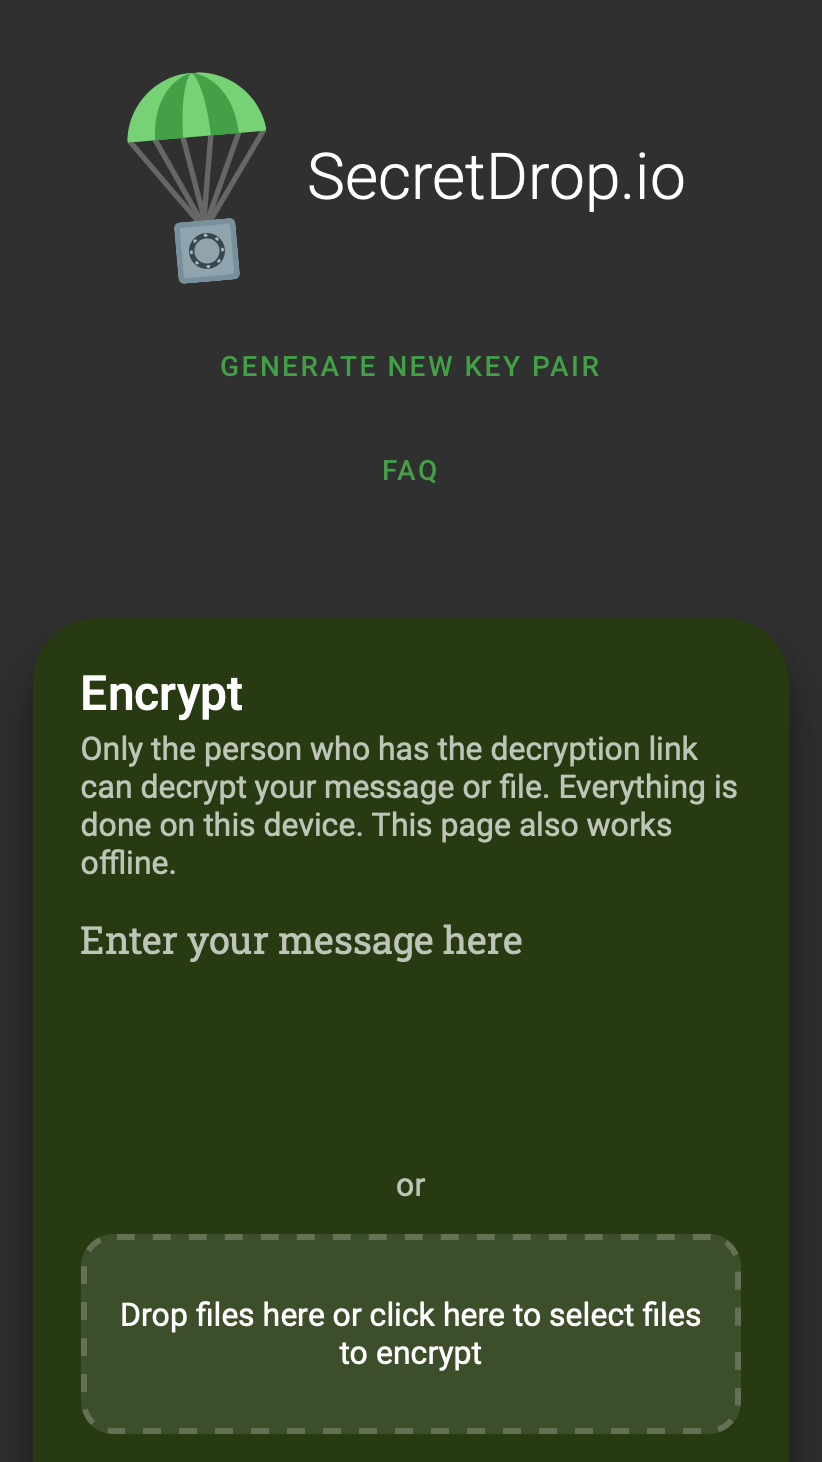 main-test-ts-encrypt-decrypt-encrypt-page-file-encryption-screenshot-411-731-0-snap.png